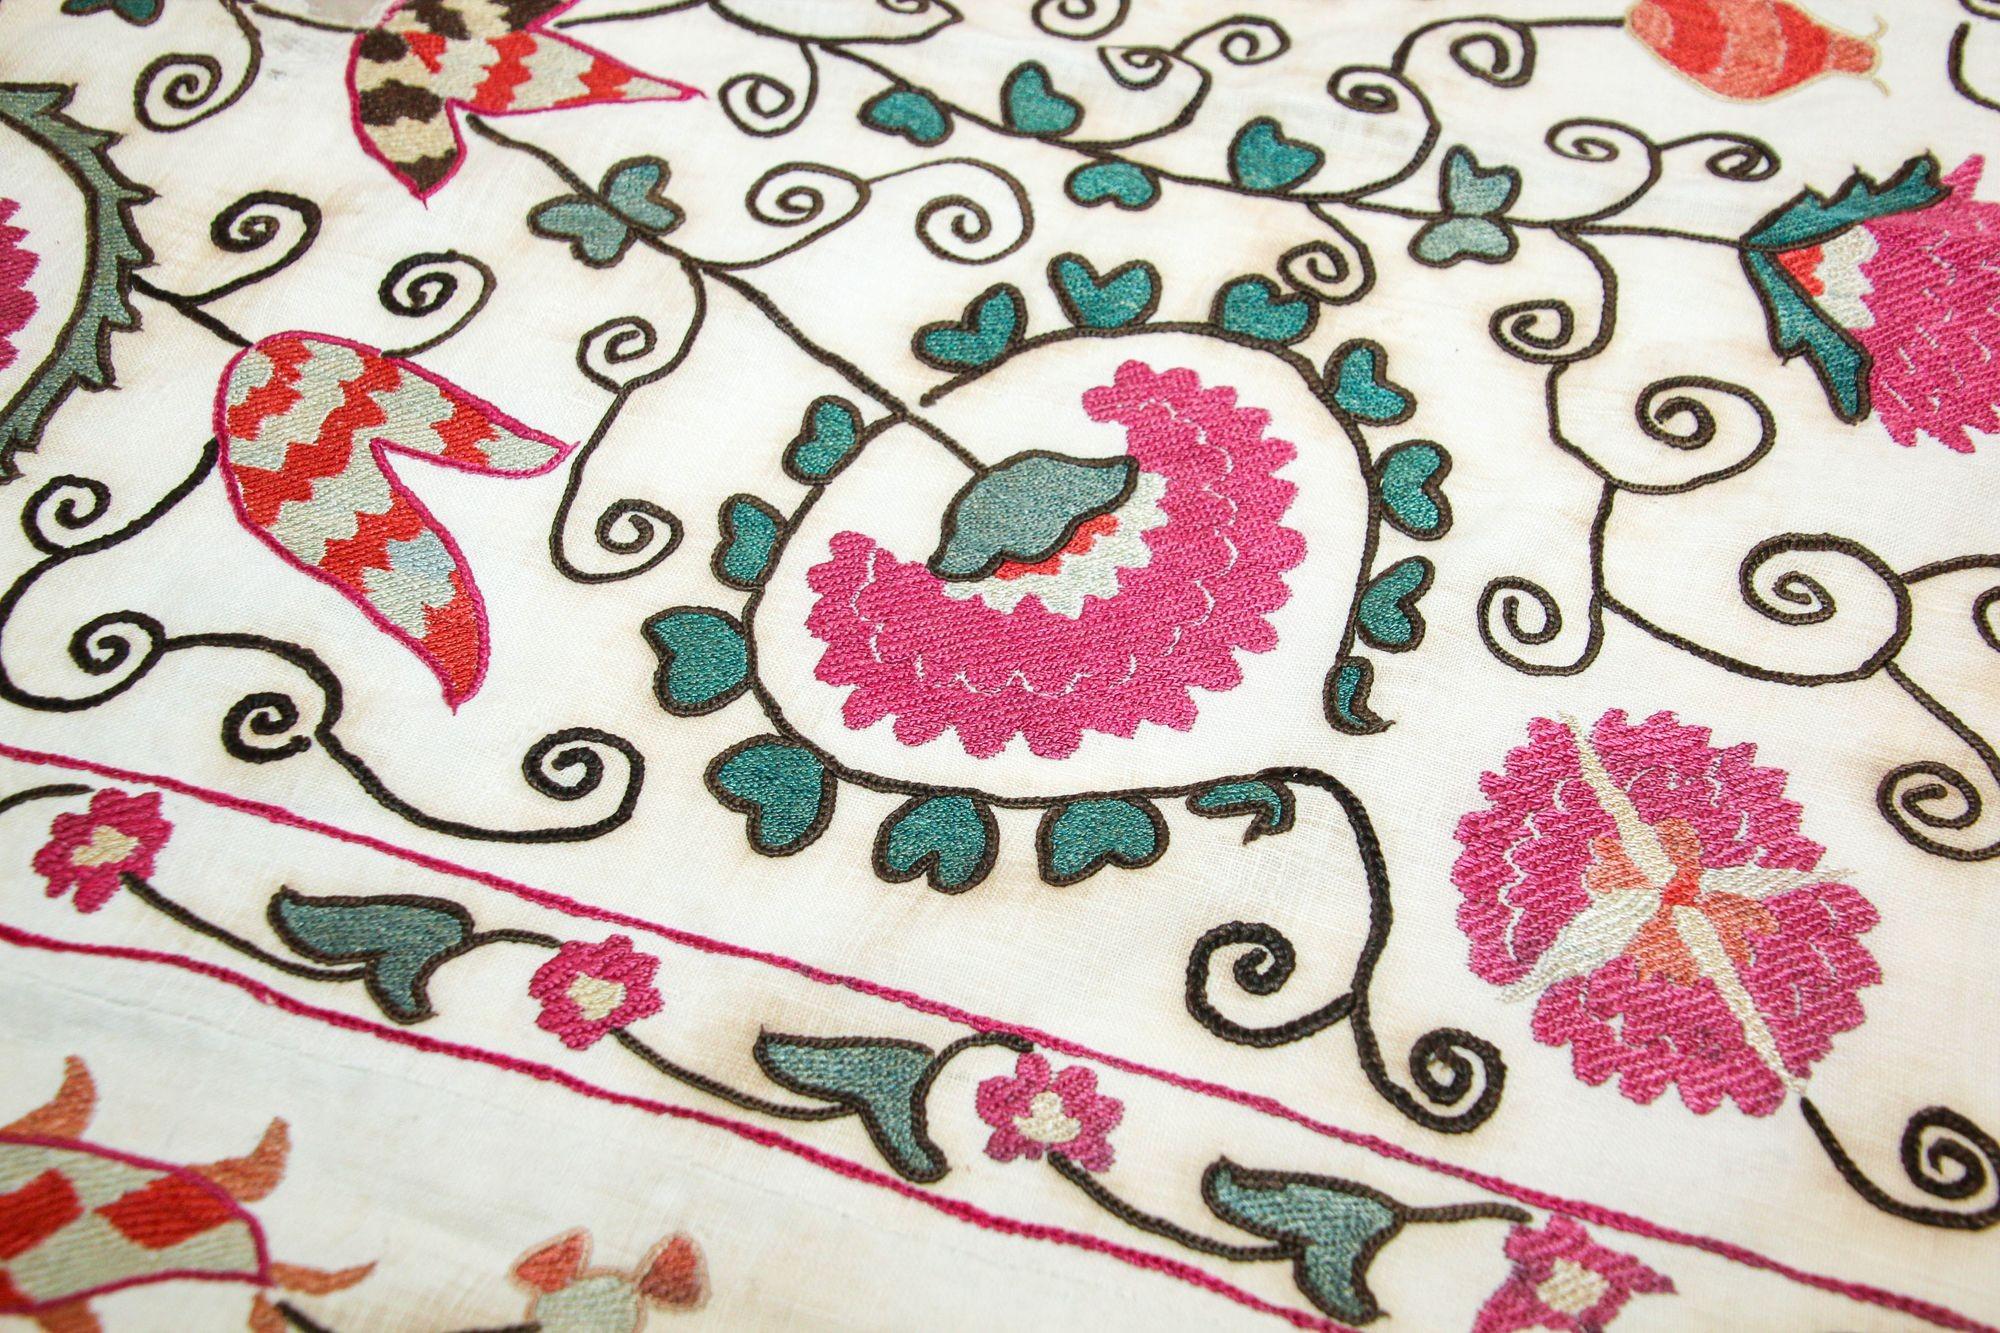 19th C. Suzani Bukhara Uzbekistan Antique Embroidered Islamic Art Textile Susani For Sale 7